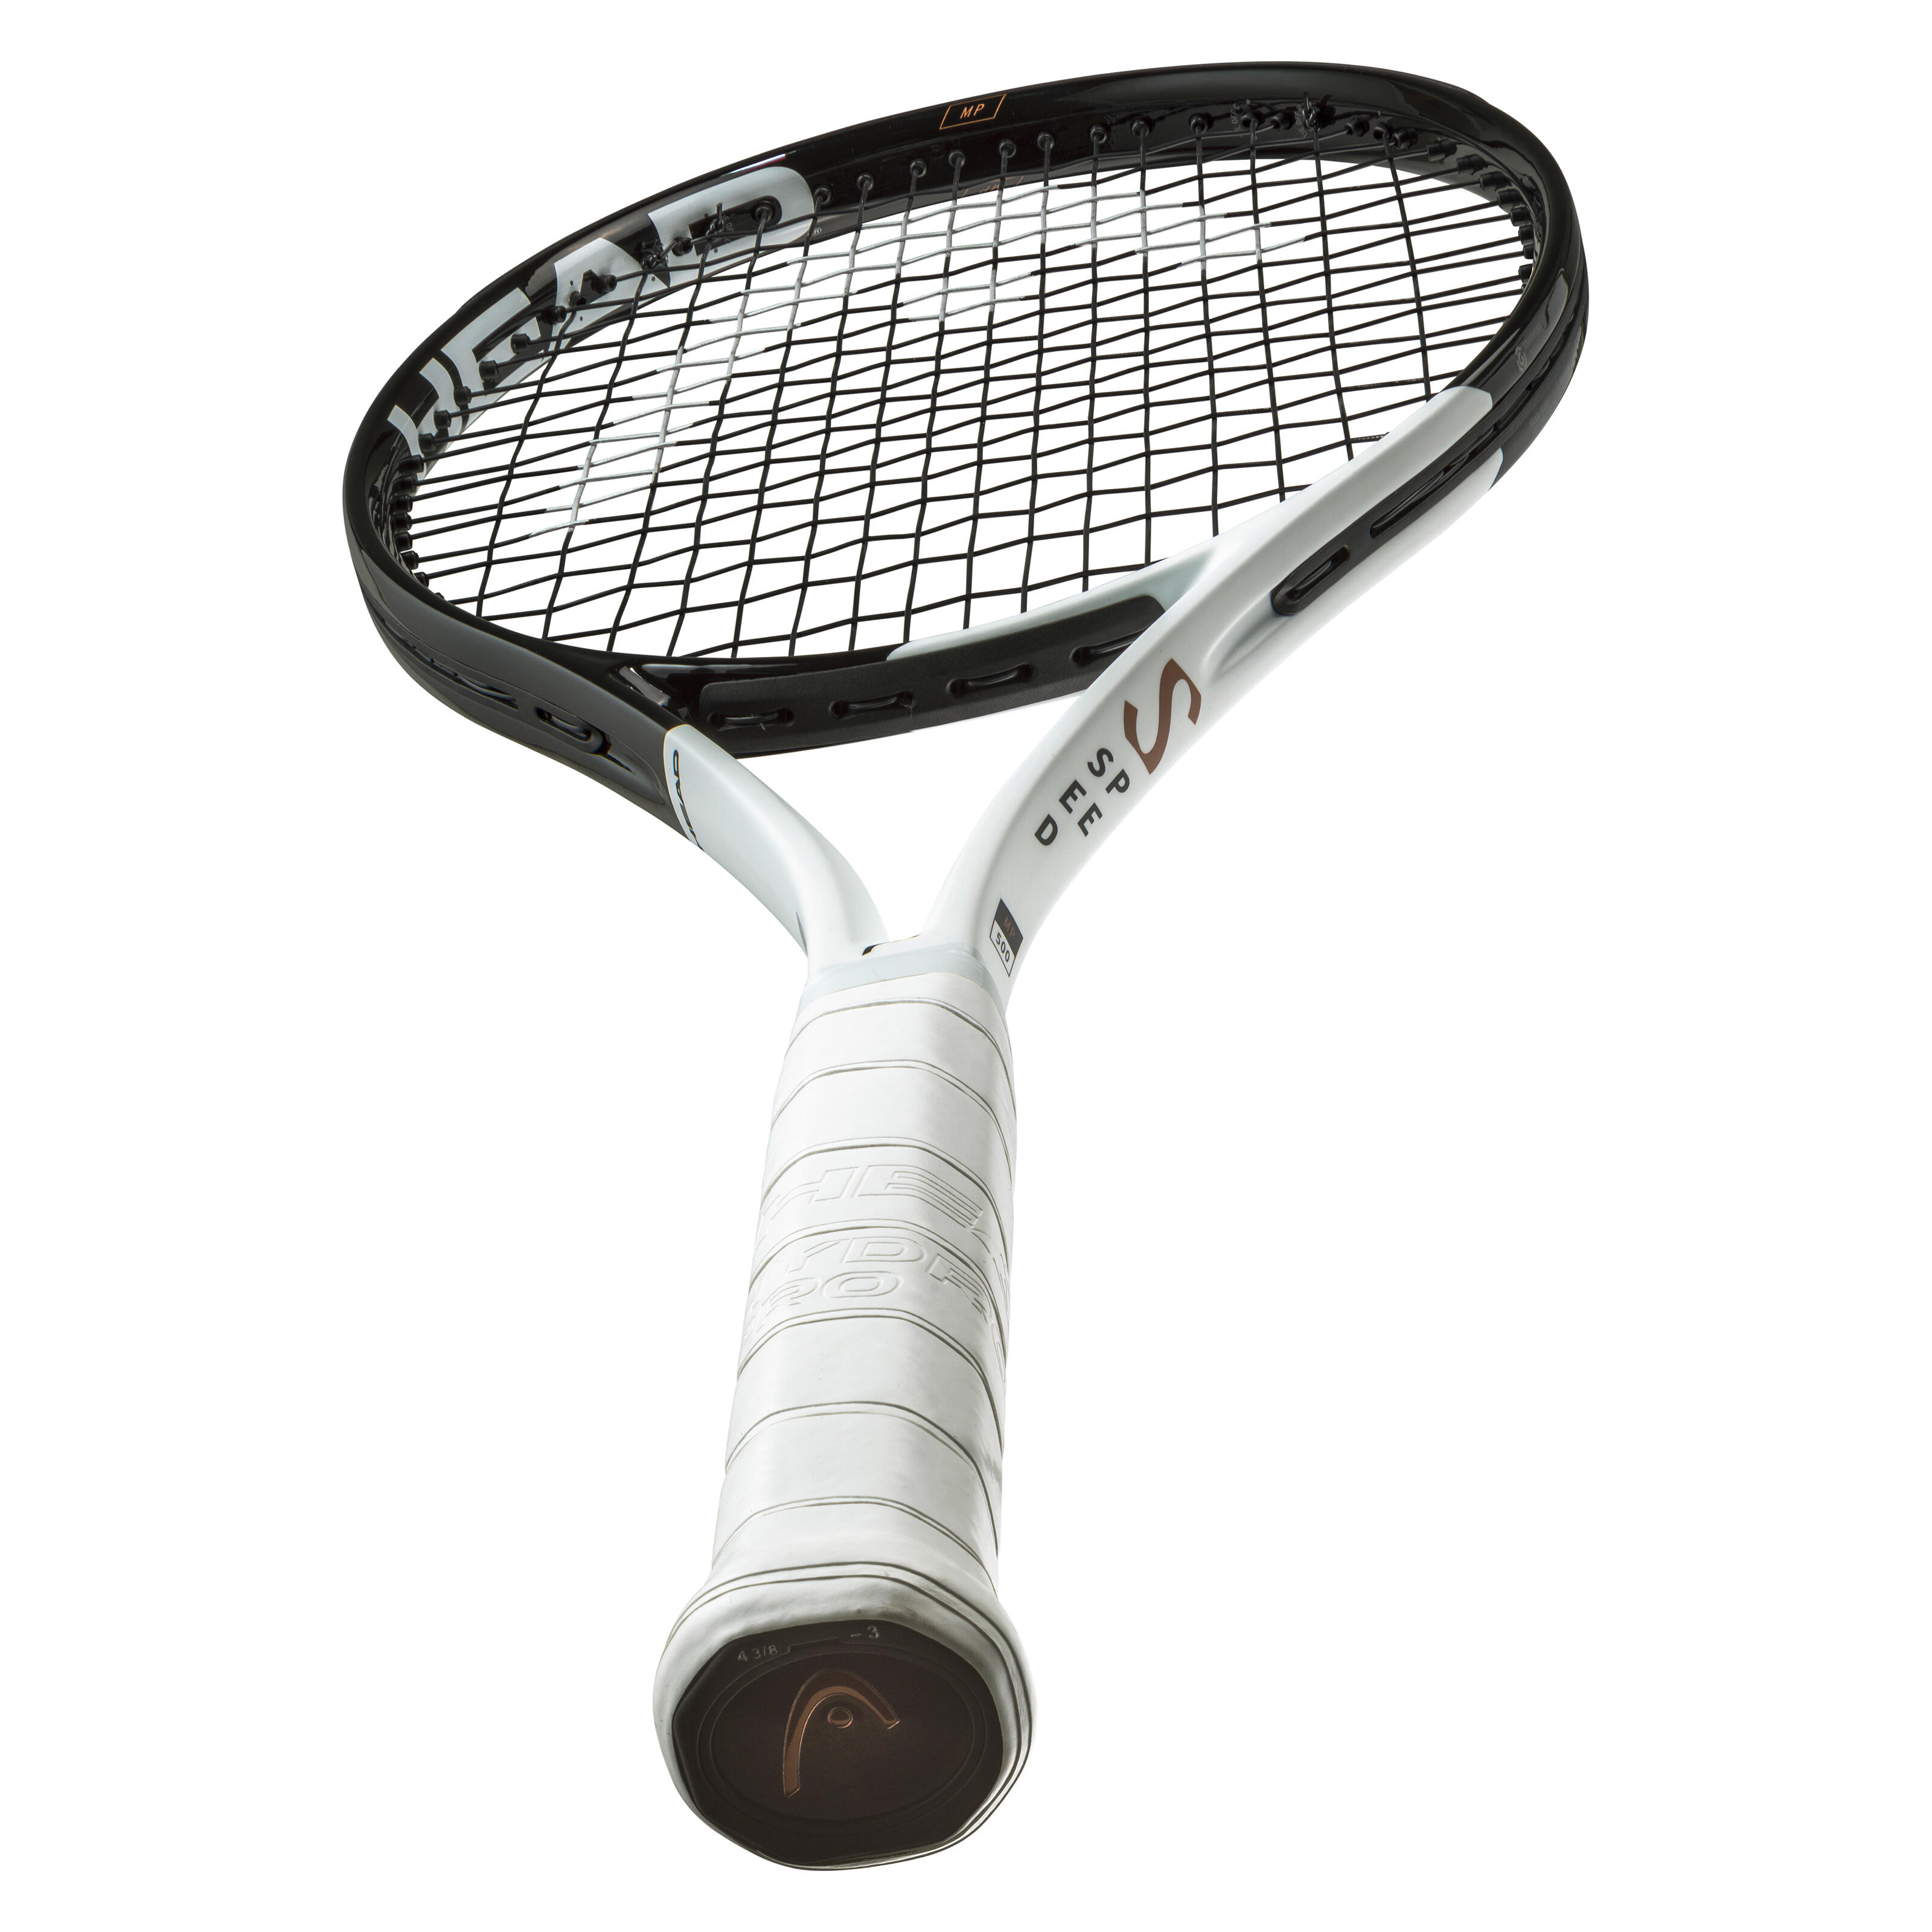 Racchetta tennis adulto Head SPEED MP nero-bianco HEAD | DECATHLON